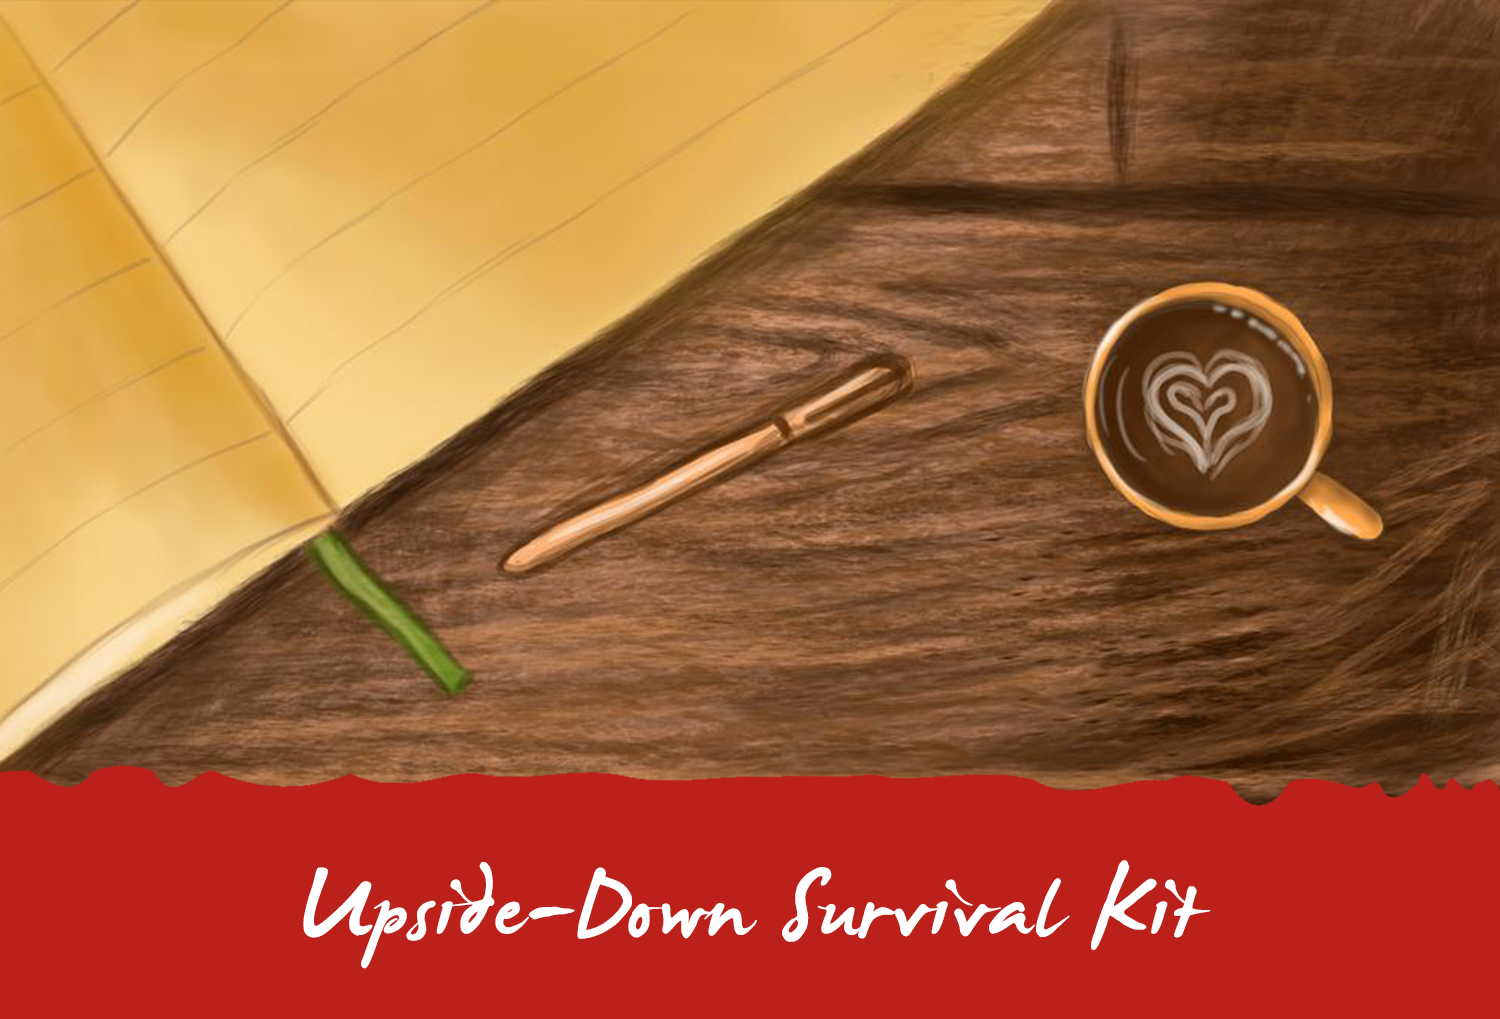 1 - Survival Kit